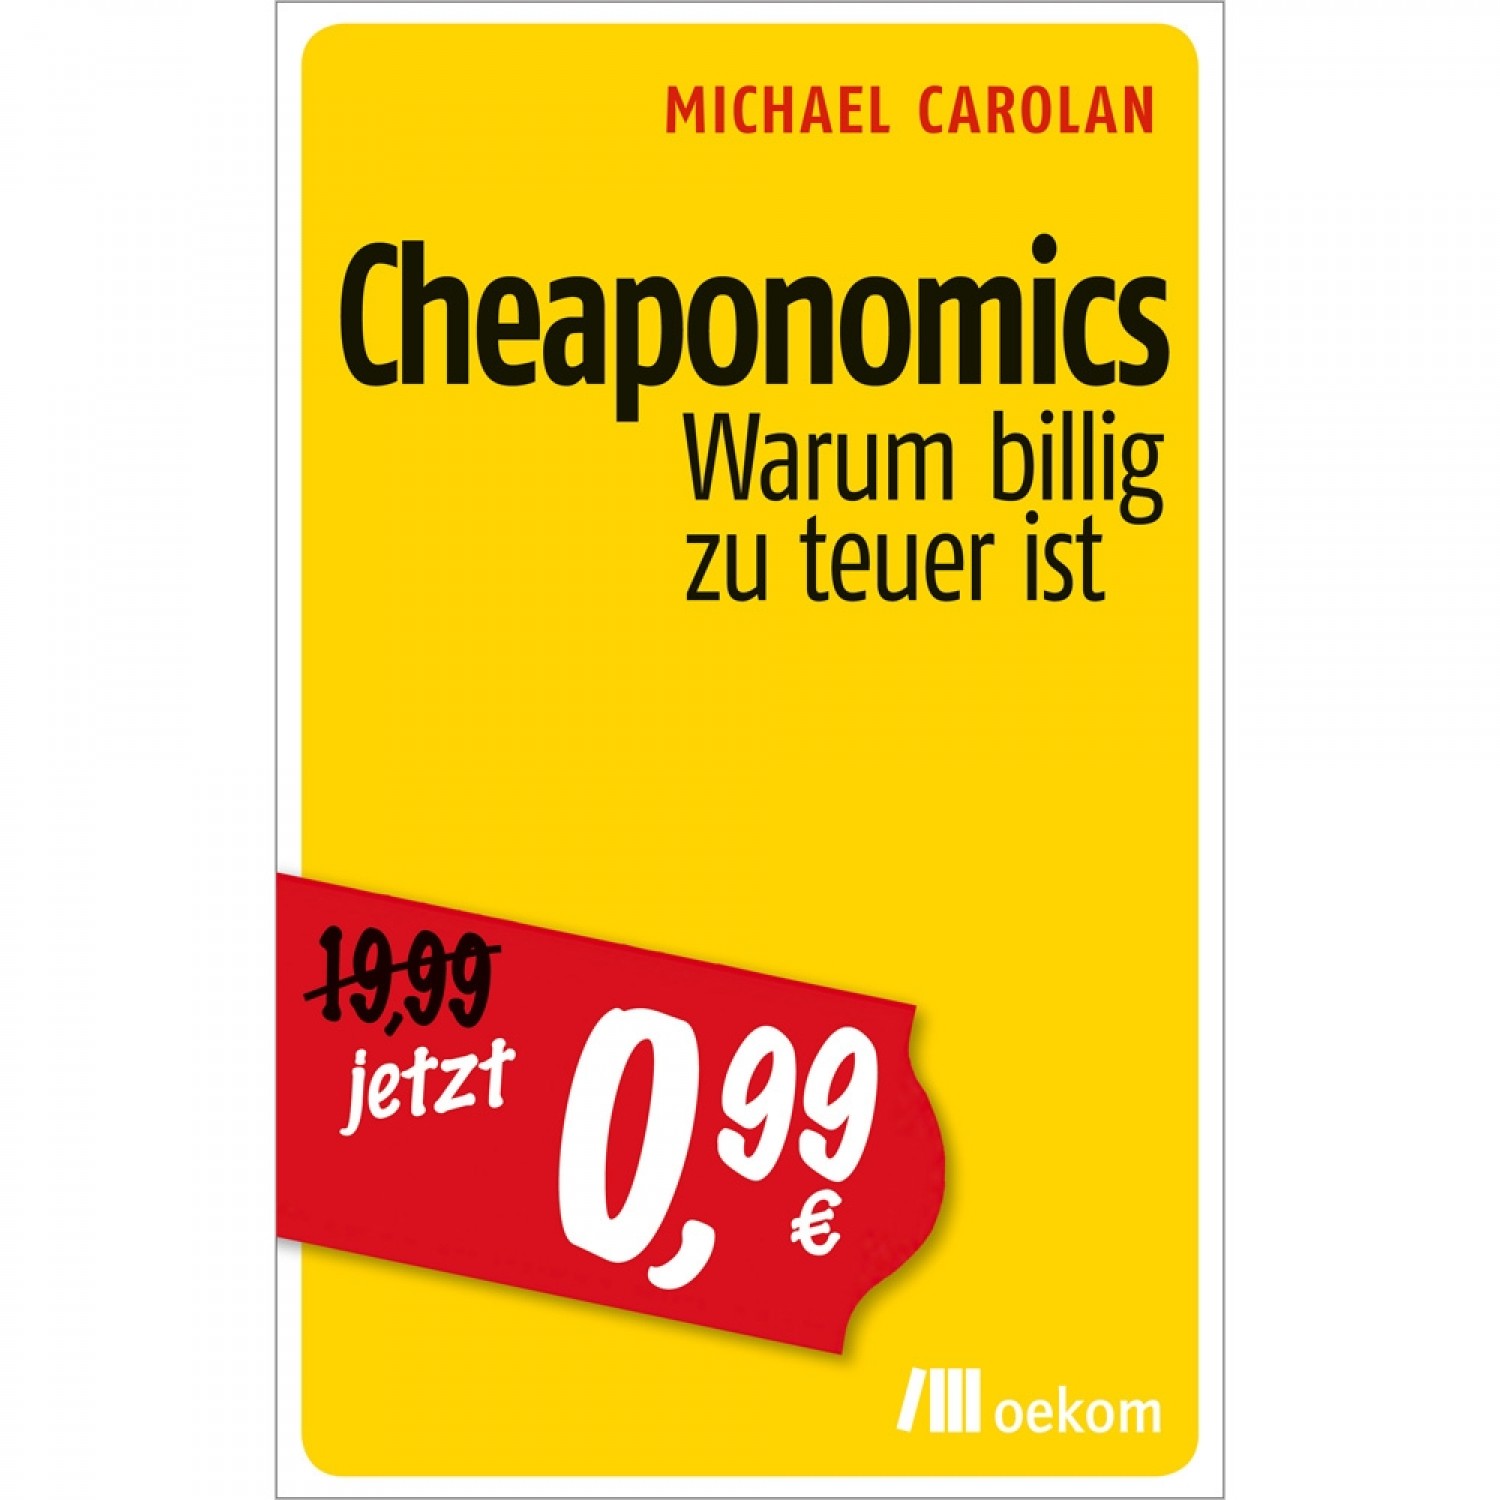 Cheaponomics - Michael S. Carolan | oekom Verlag